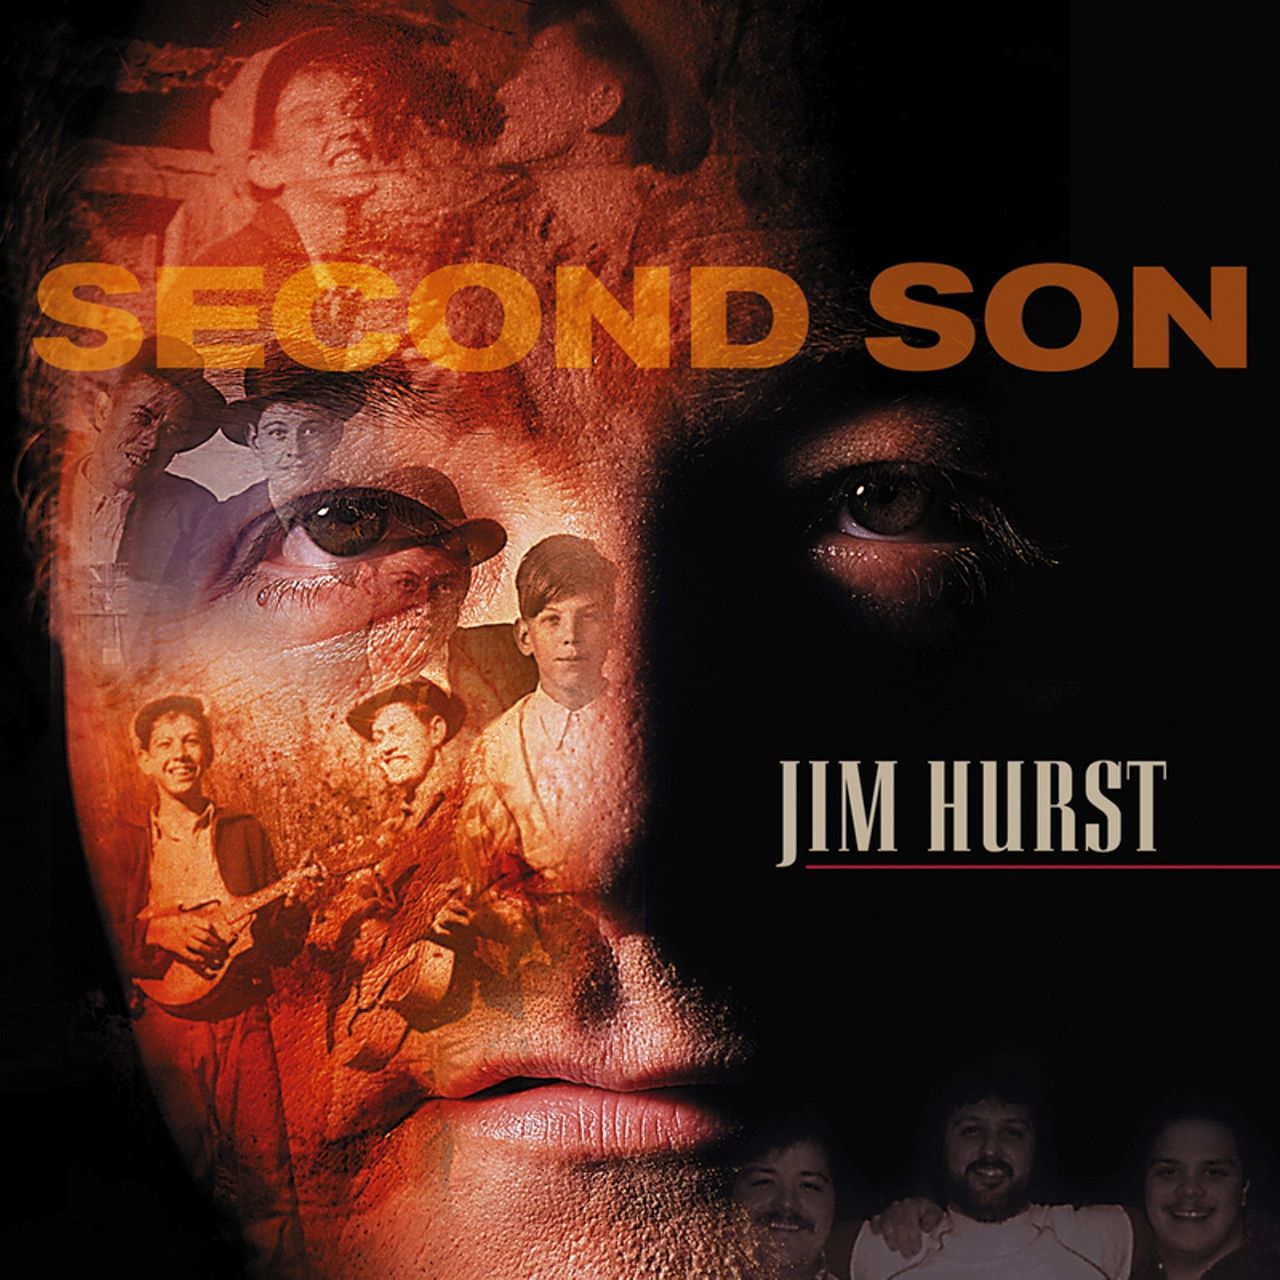 Jim Hurst - Second Son cover album